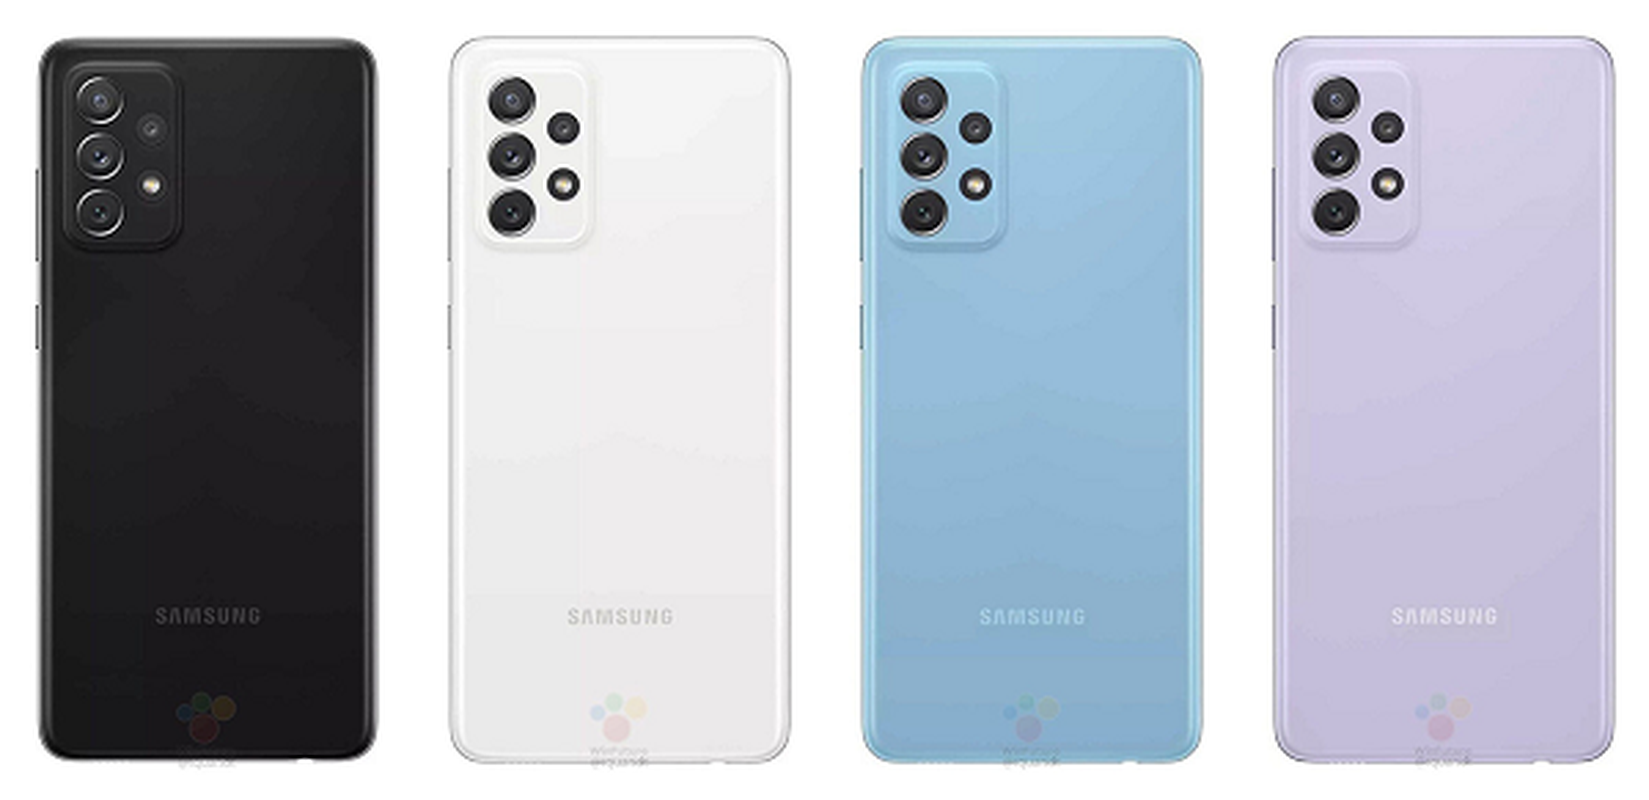 Smartphone tam trung dau tien “huong” nhung cong nghe doc quyen cua Samsung-Hinh-10